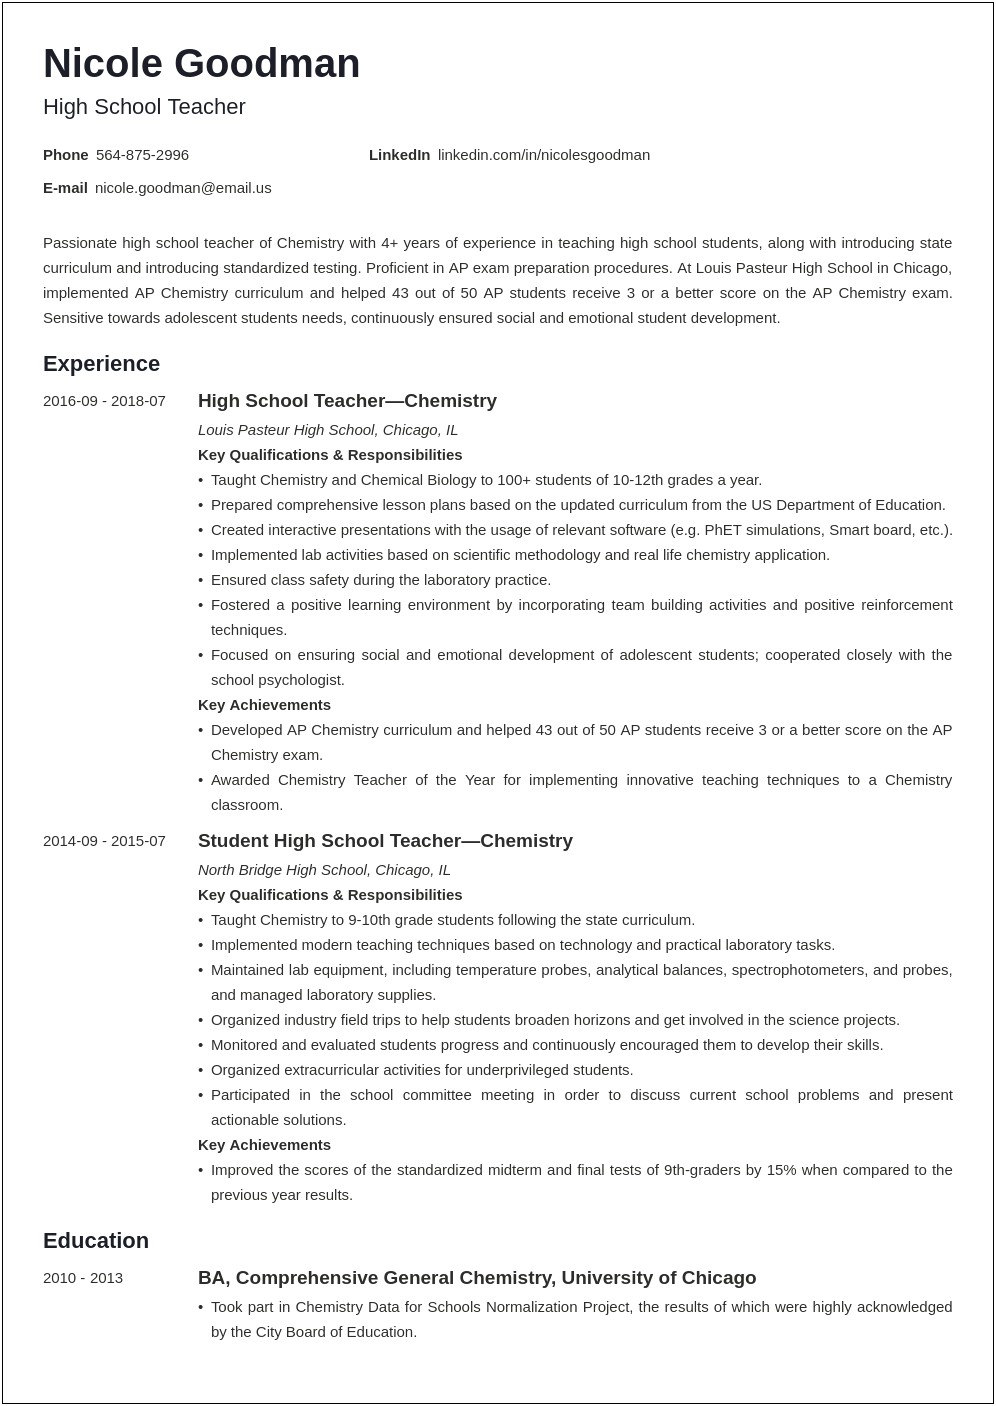 Resume Objective High School Math Teacher